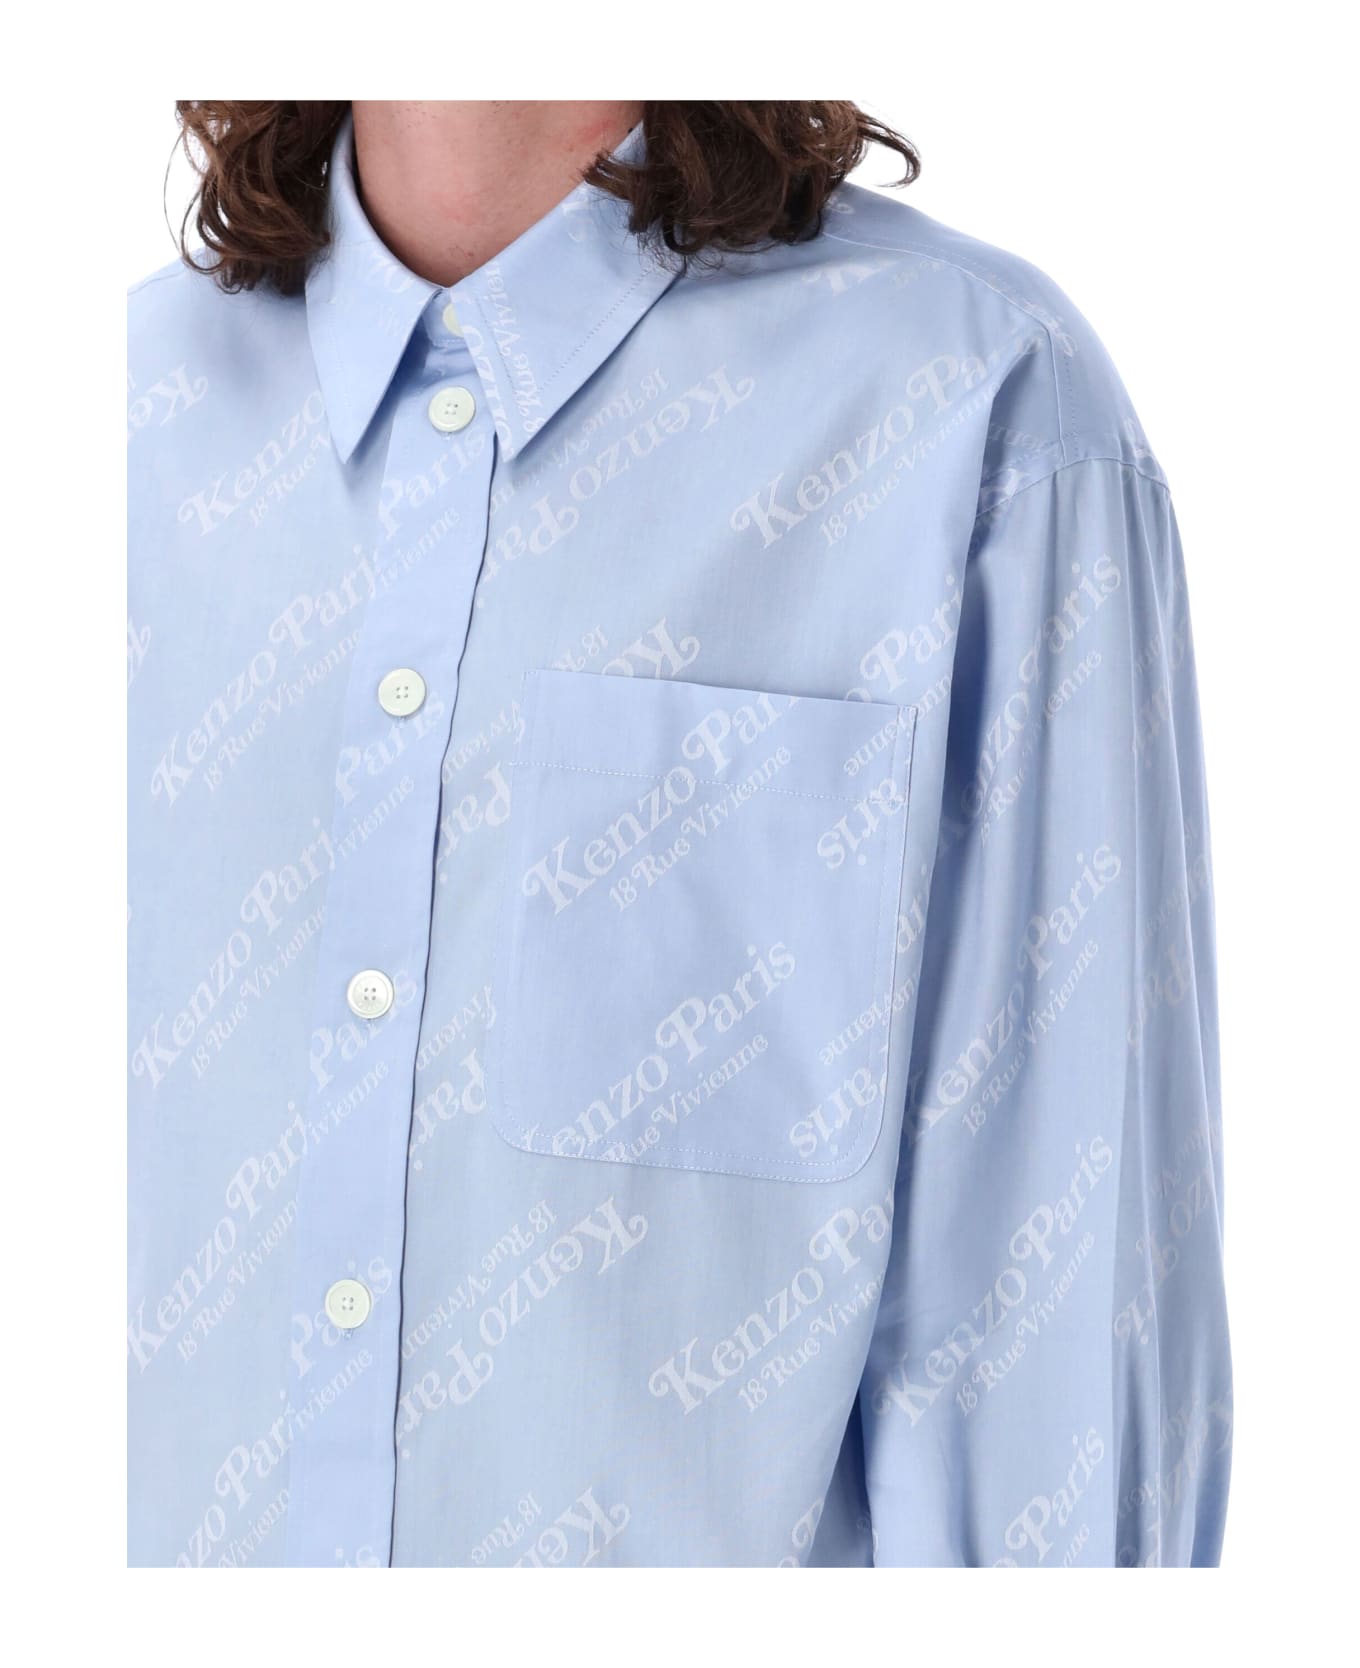 Kenzo Verdy Over Shirt - LIGHT BLUE